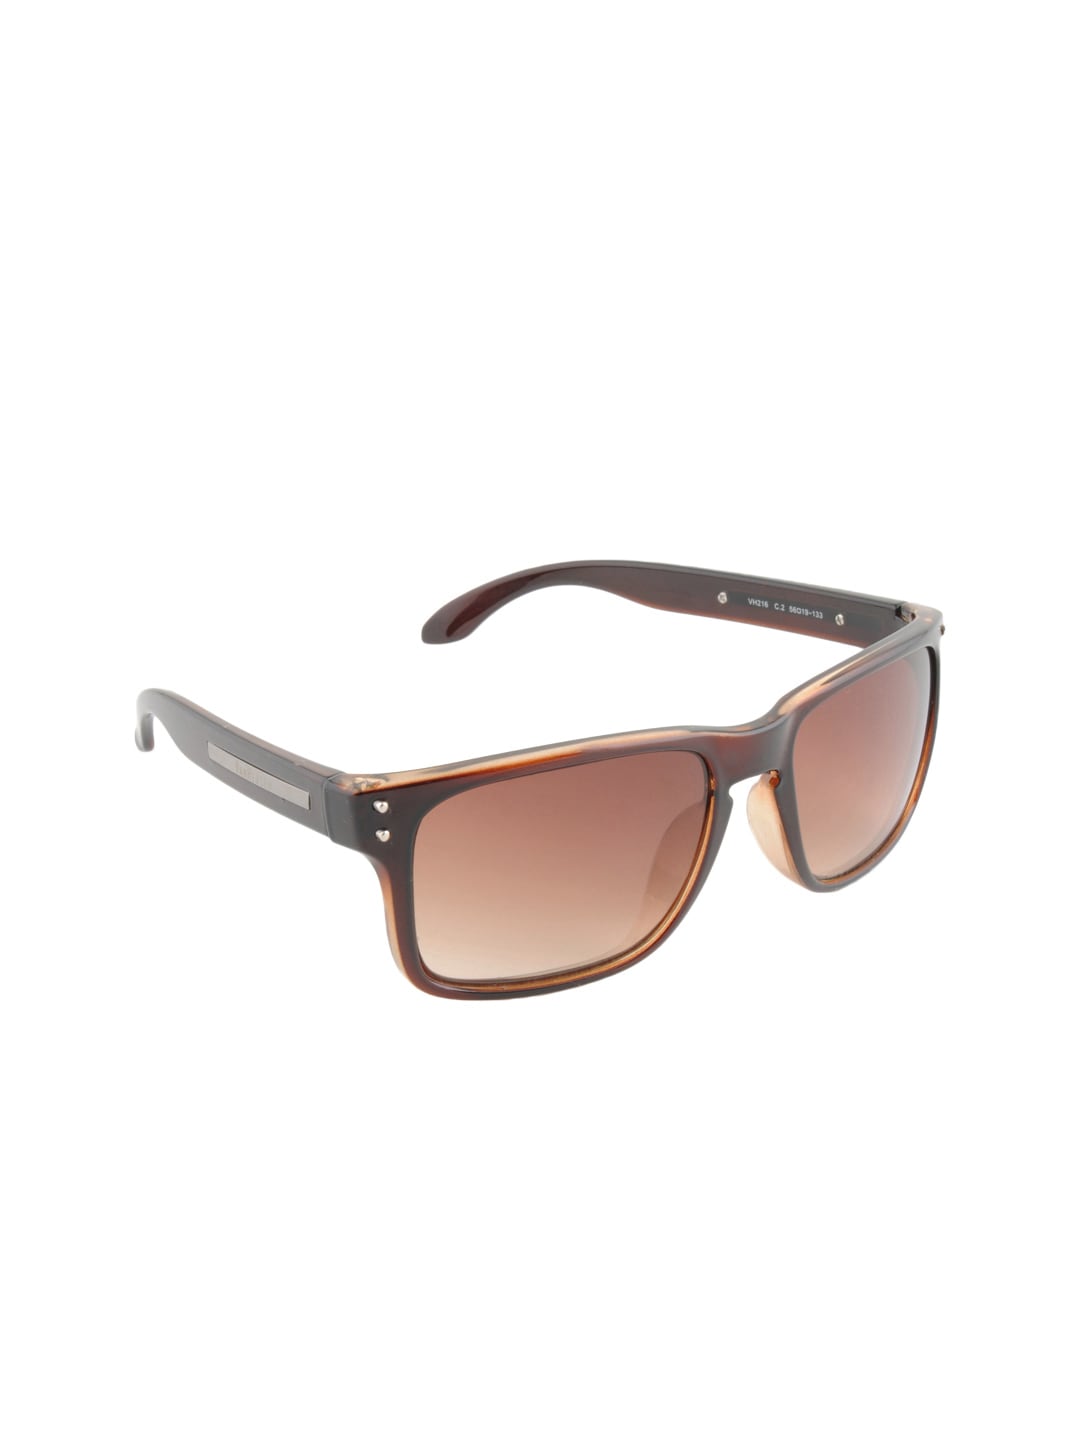 Van Heusen Unisex Sunglasses VH216-C2